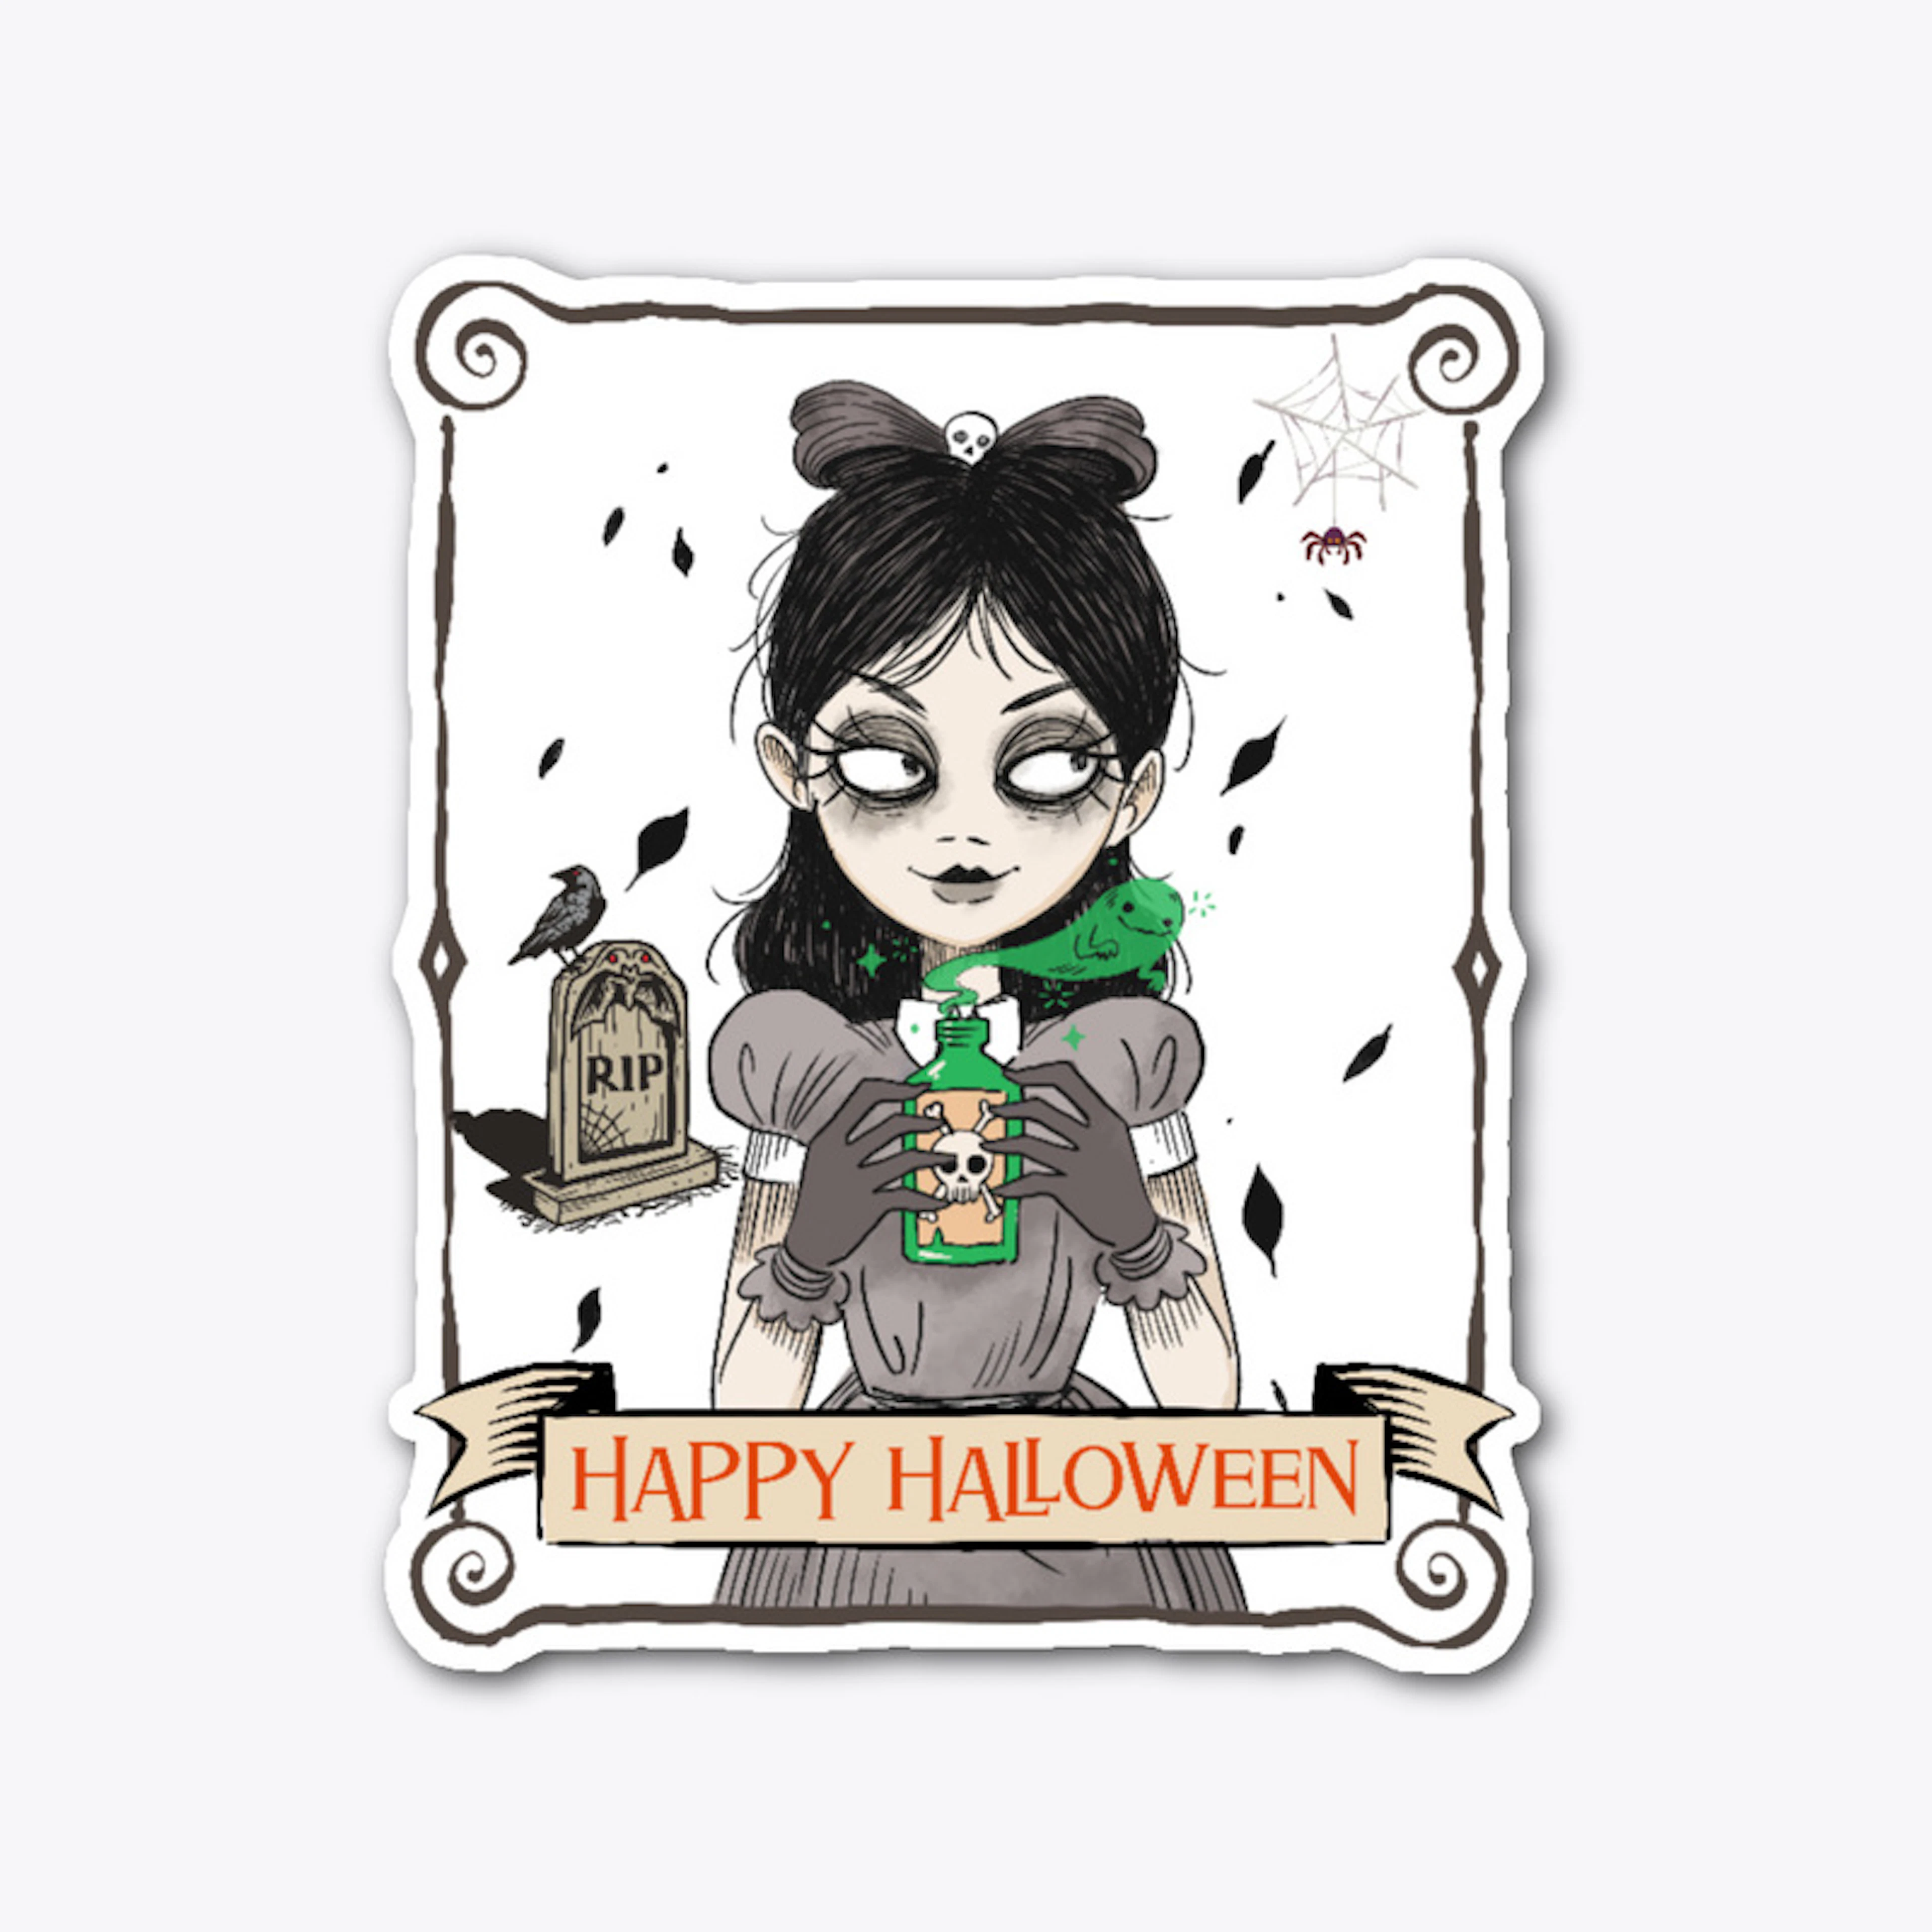 The Fab 10 "Halloween Creepy Goth"